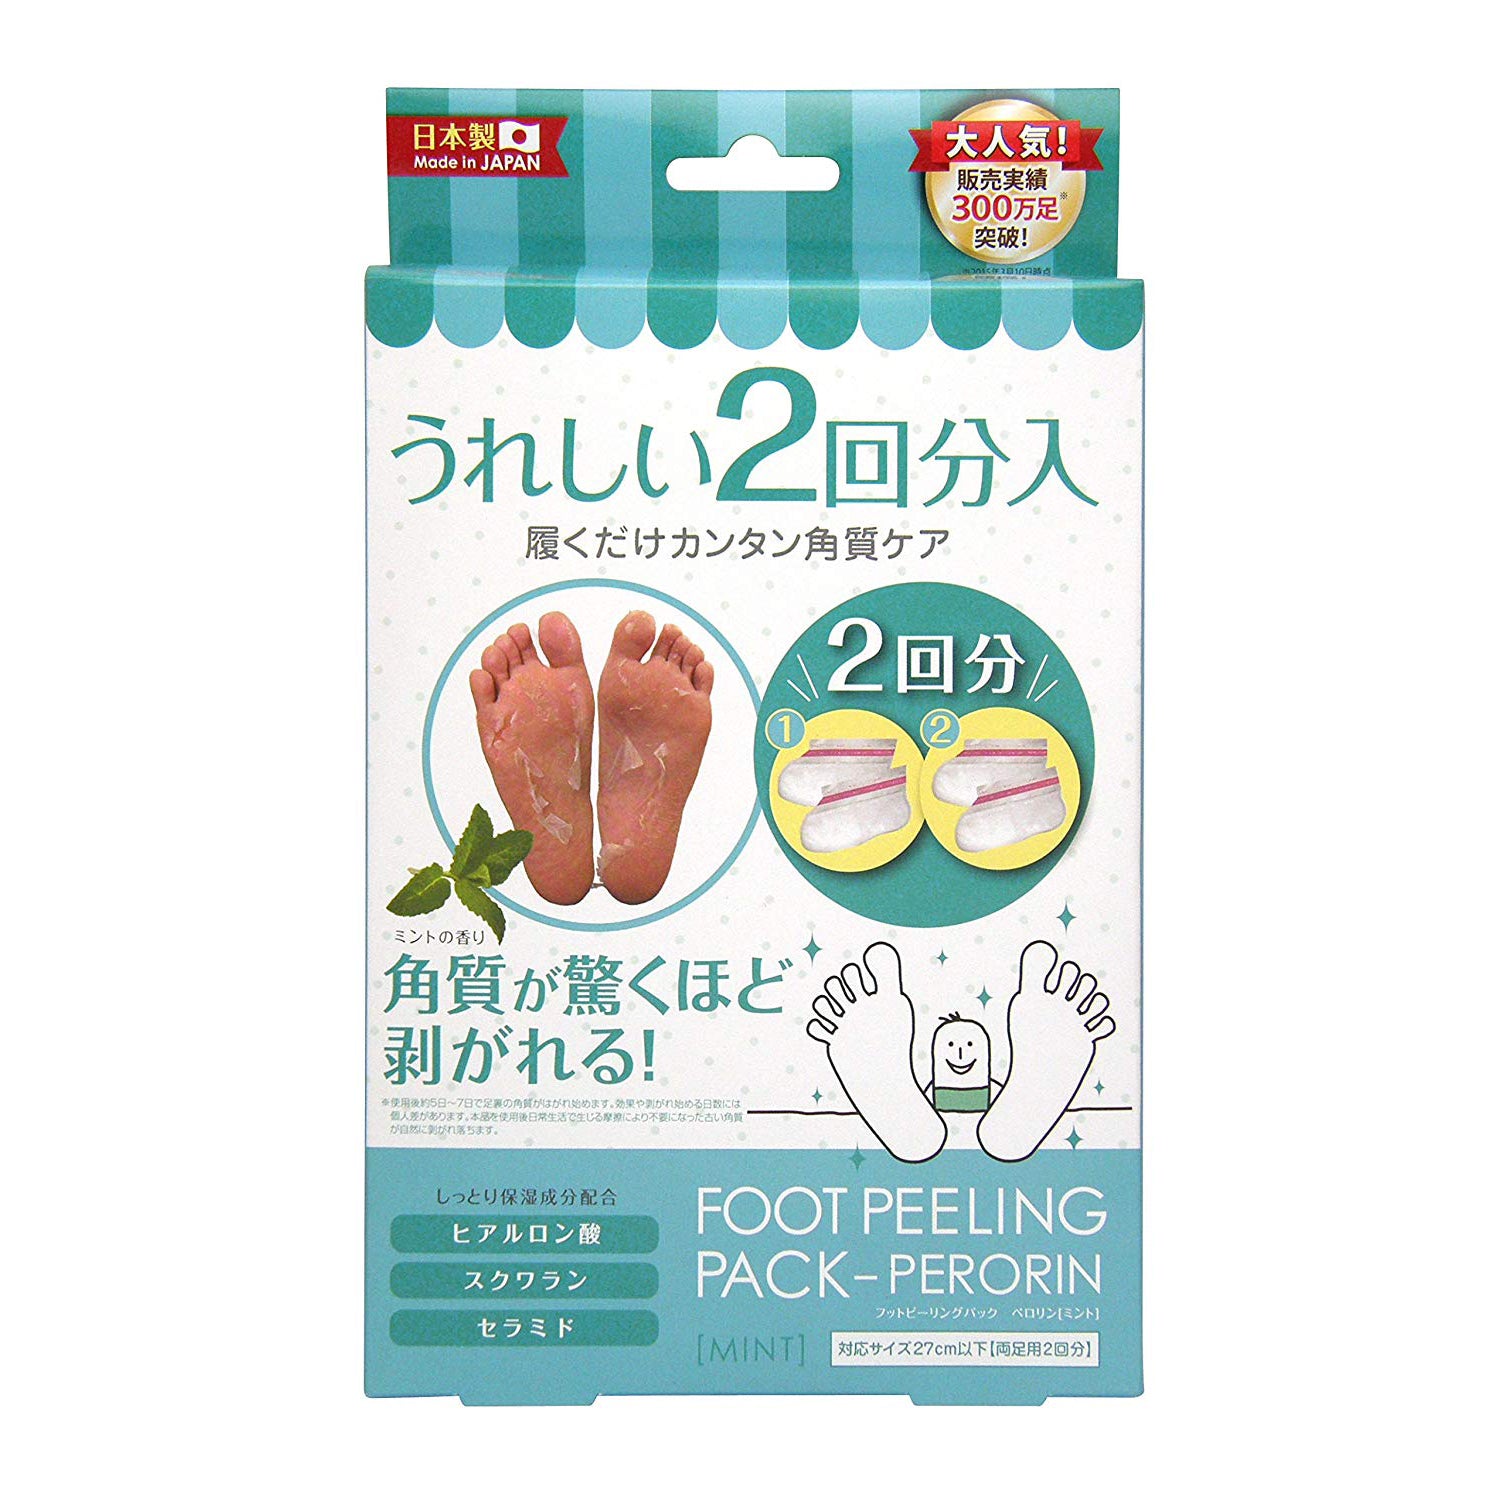 Sosu Perorin Foot Peeling Pack - Mint Beauty Sosu   